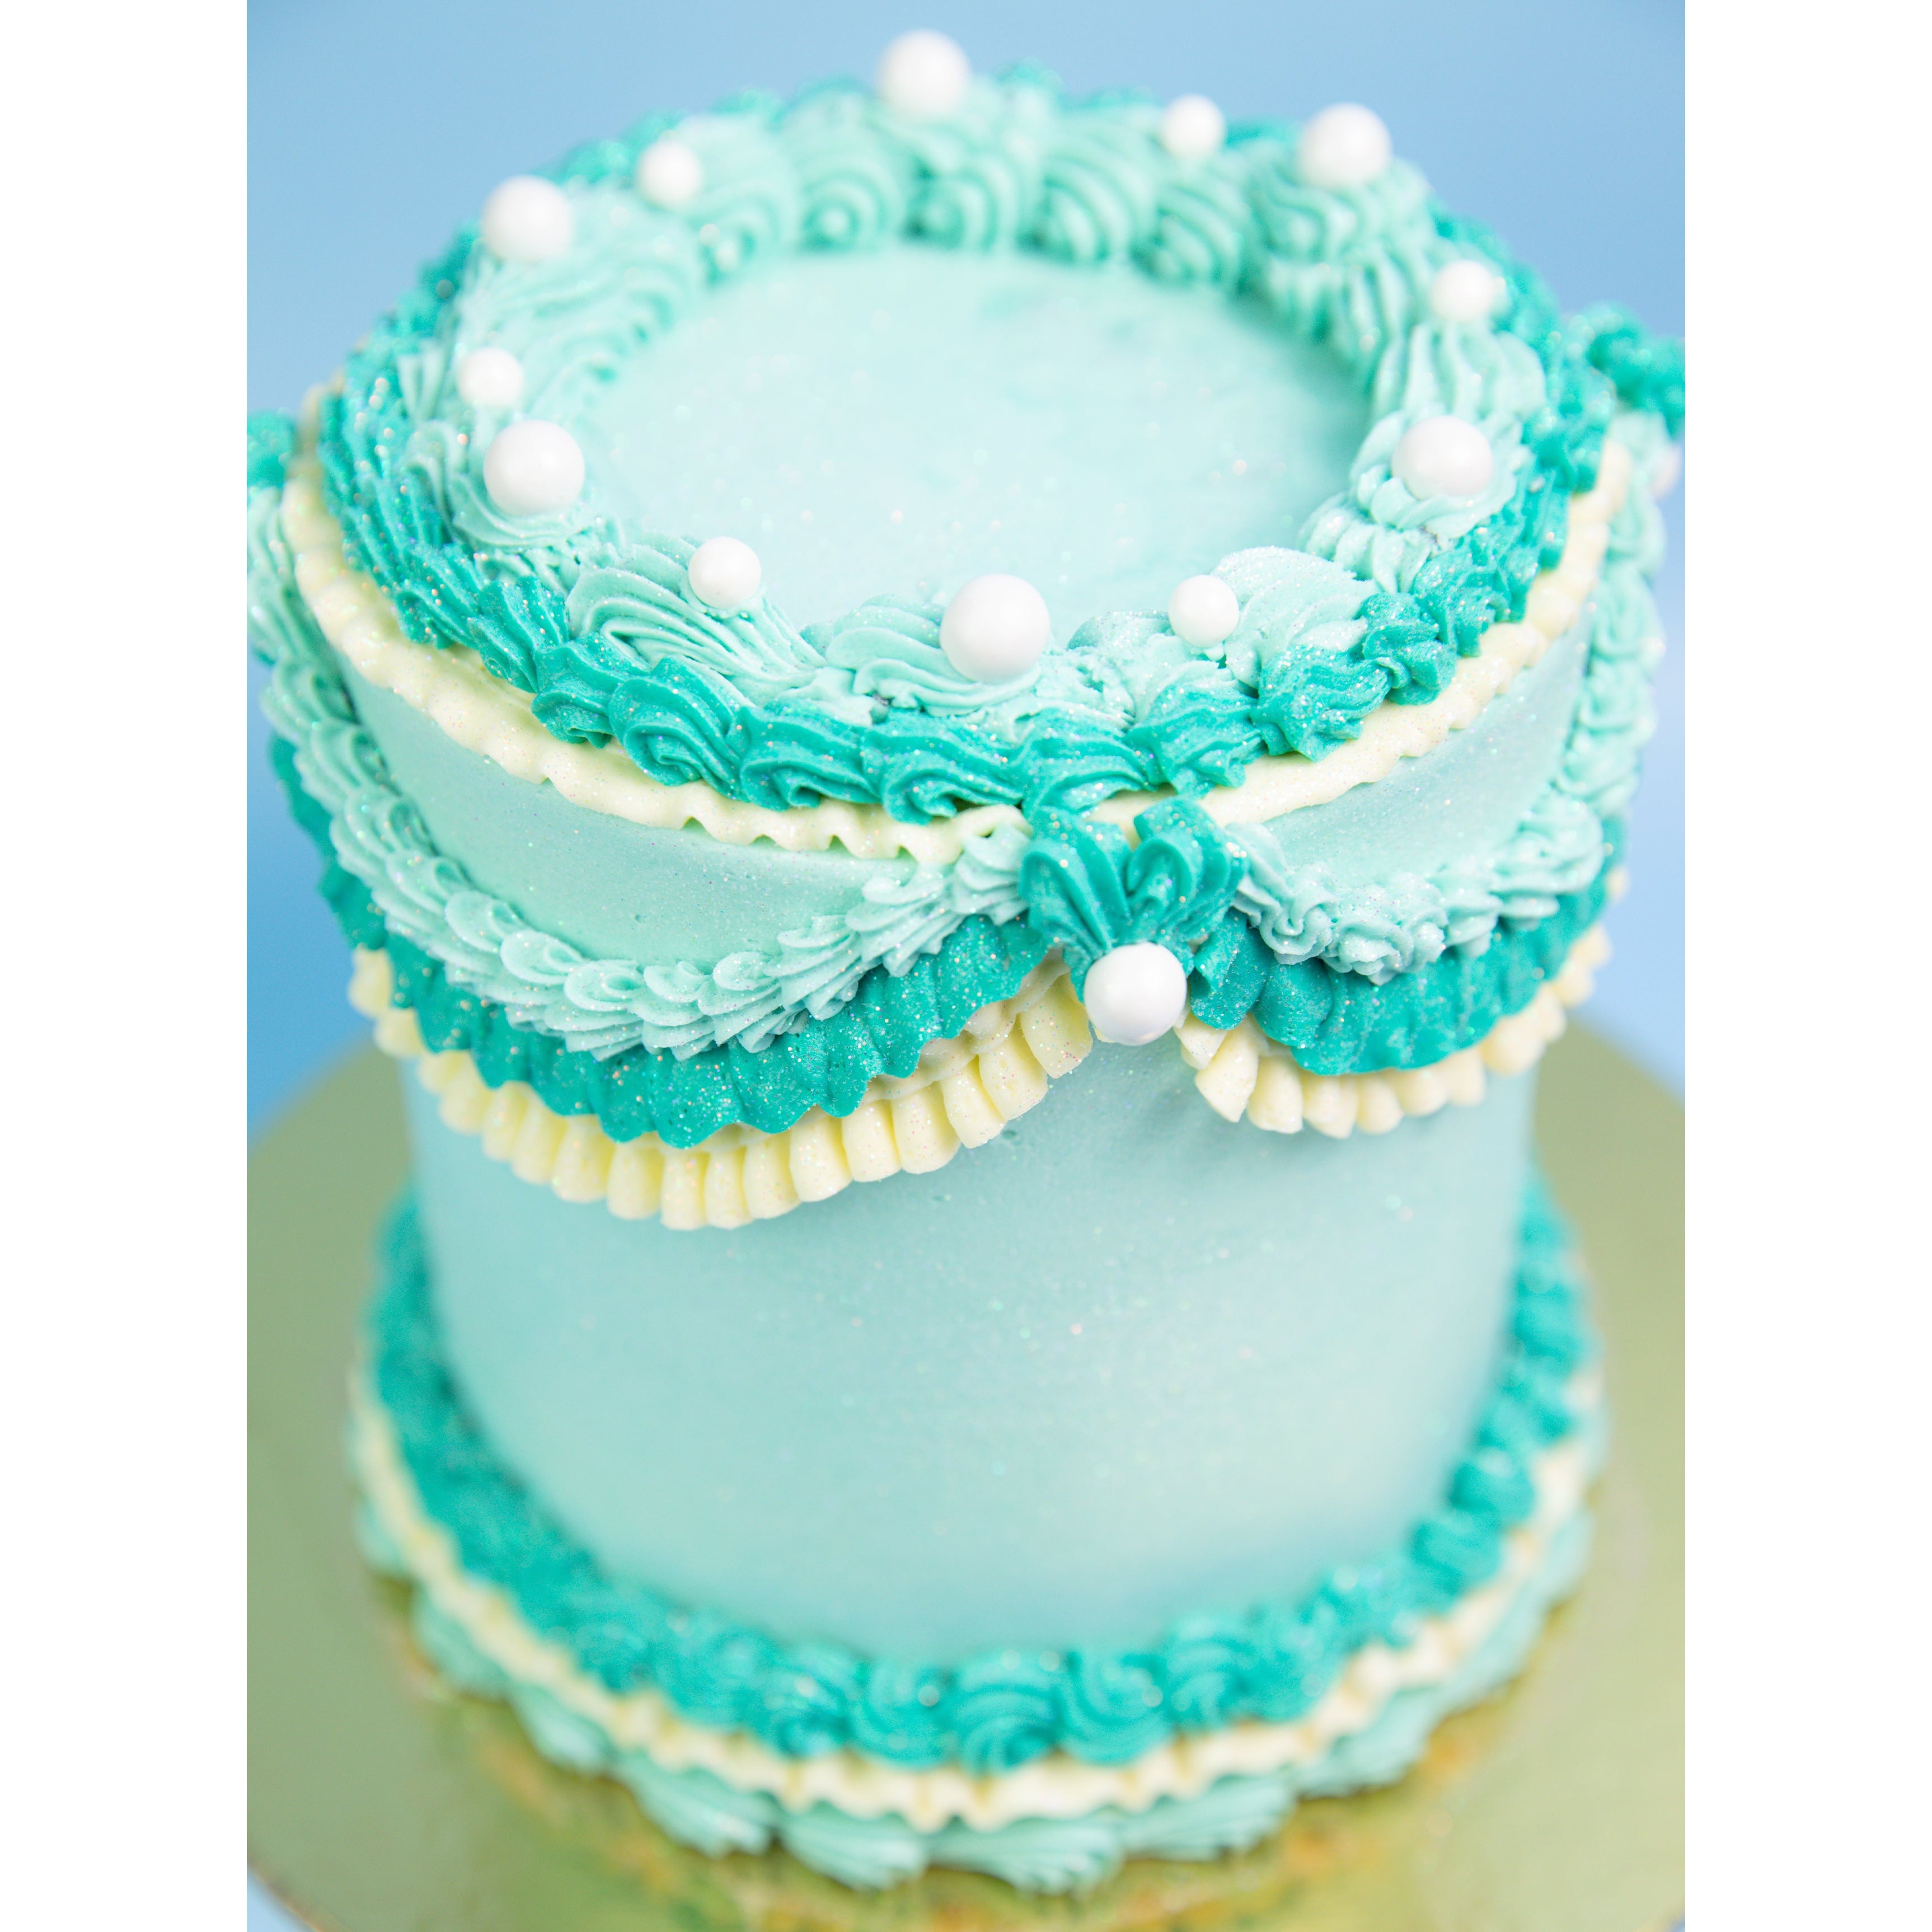 39 Cake design Ideas 2021 : Blue Ombre Ruffle Cake